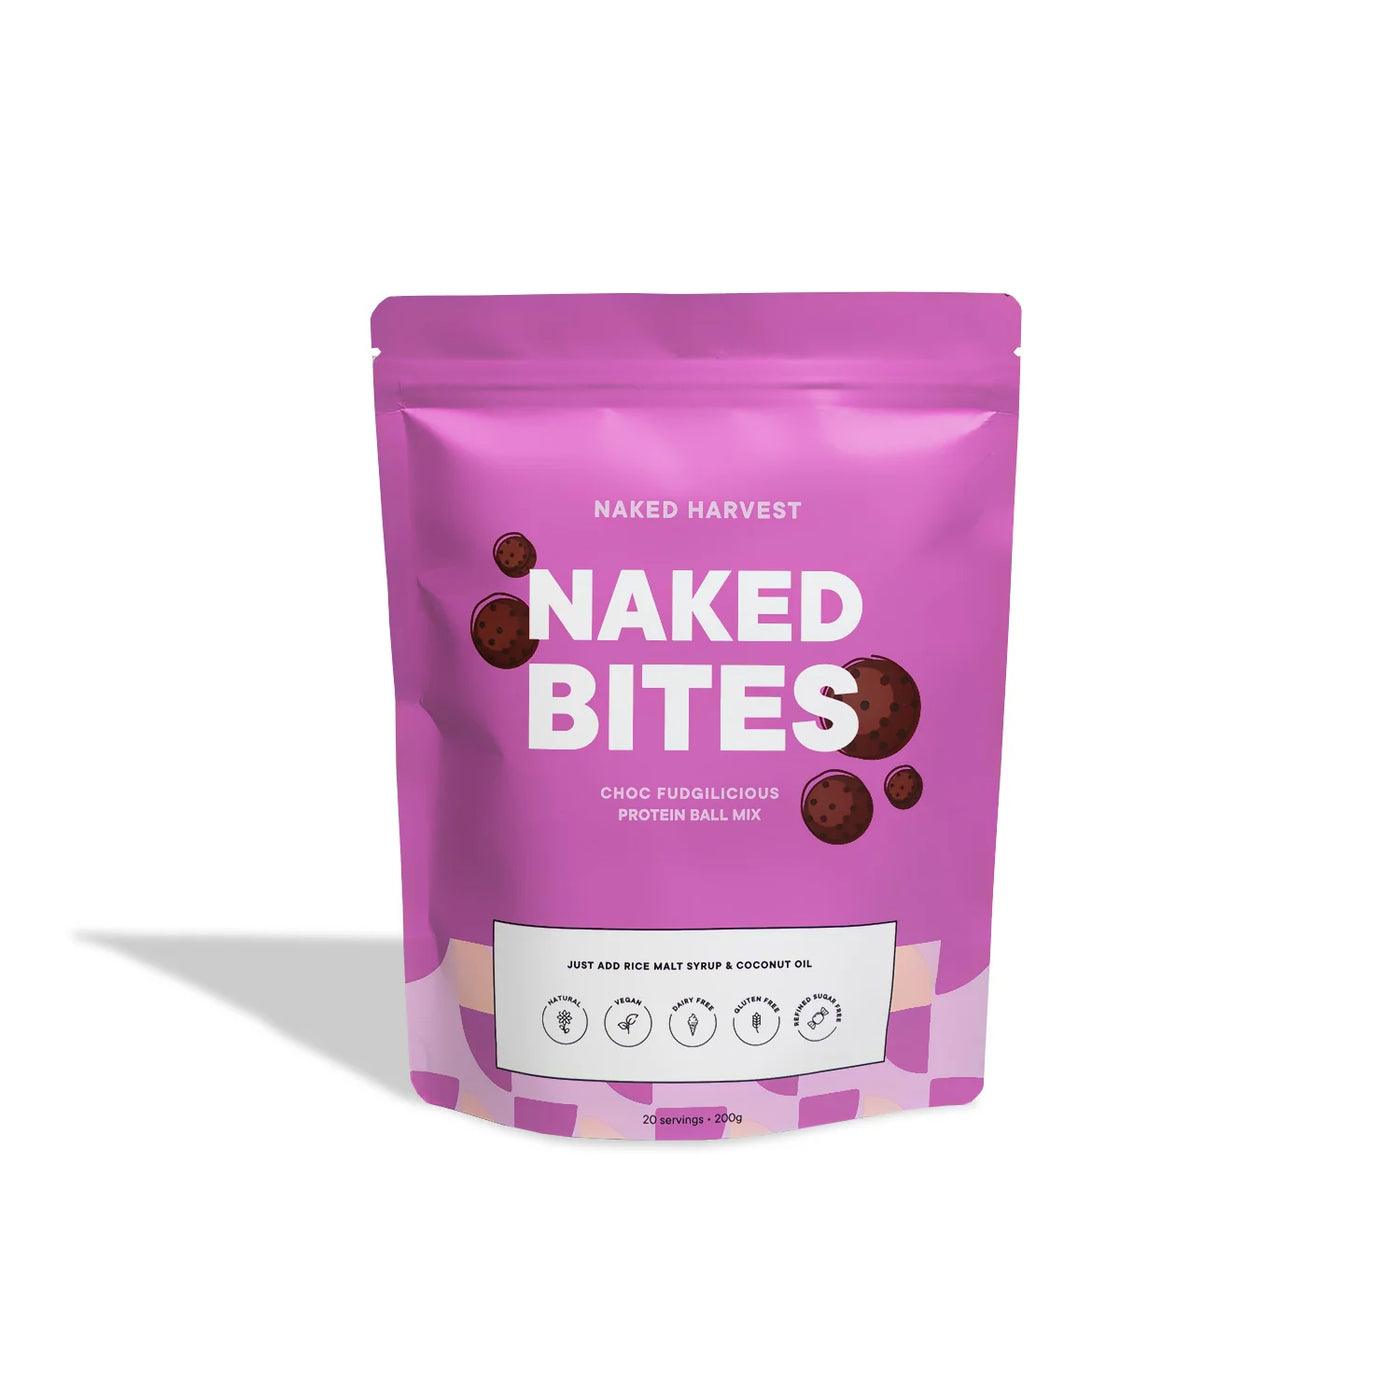 Naked Bites Choc Fudgillicious - 200g